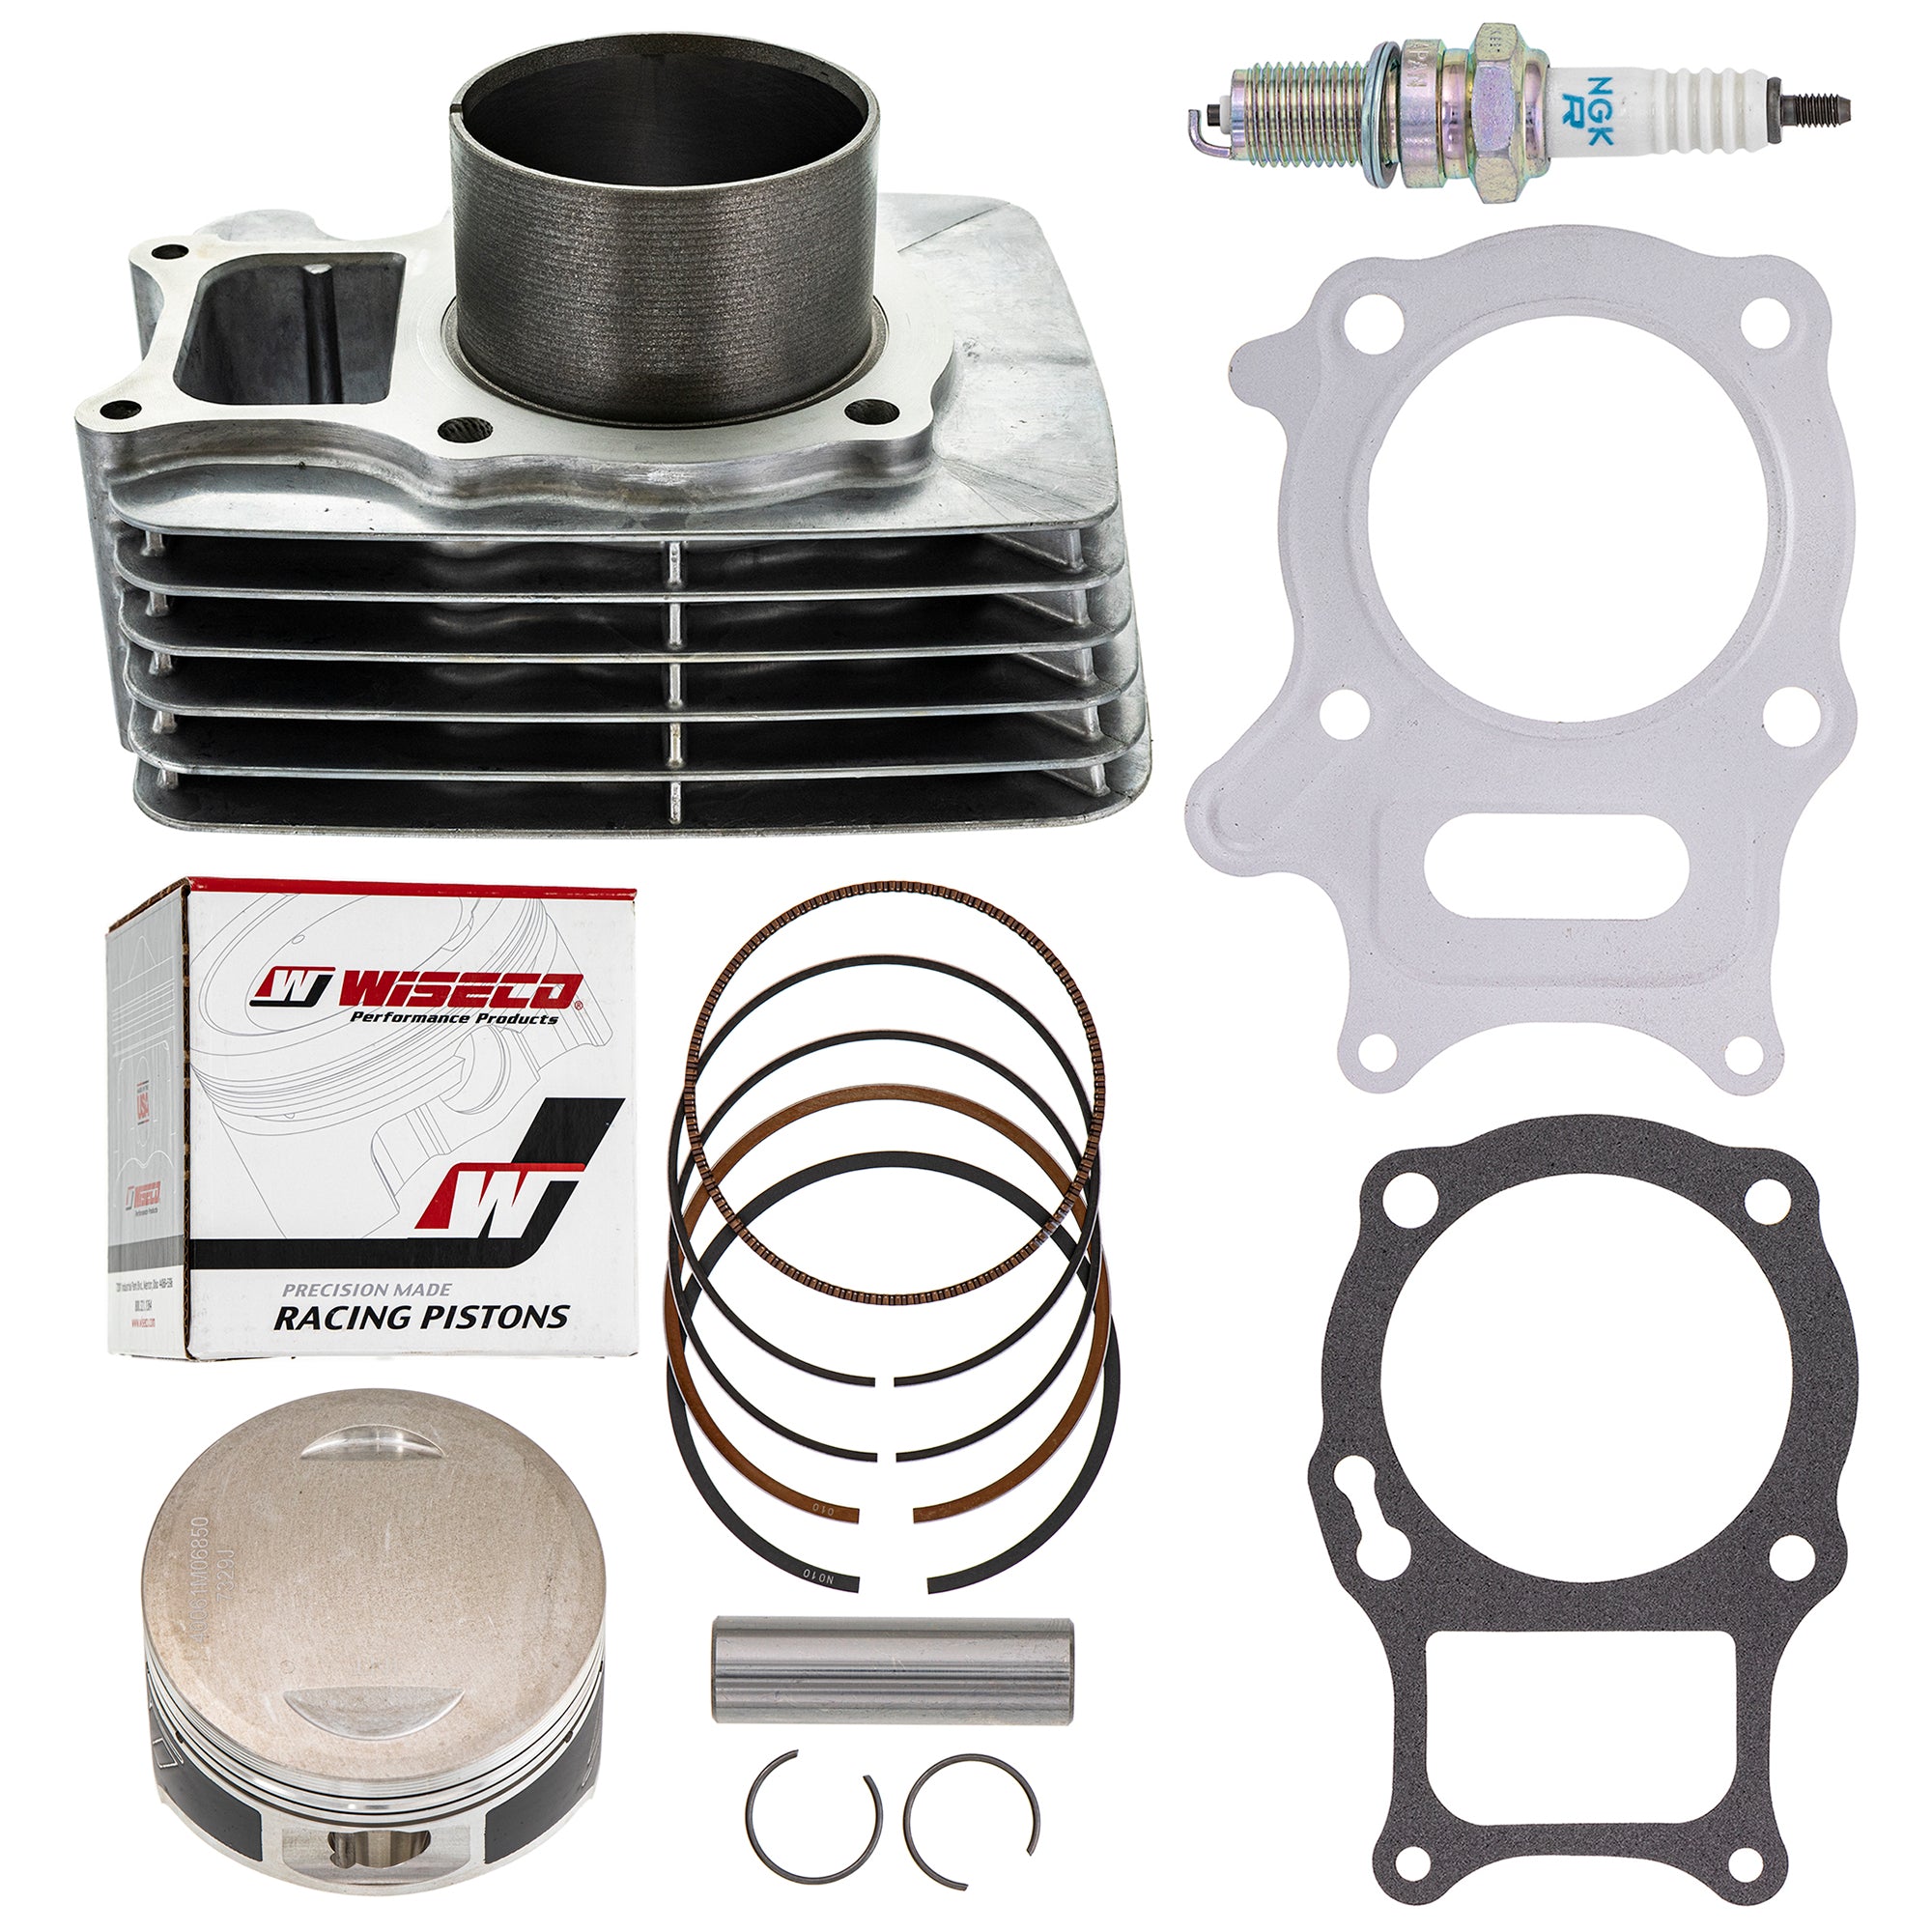 Cylinder Wiseco Piston Gasket Kit for zOTHER Honda TRX250X
Honda TRX250X












Honda NICHE MK1003456